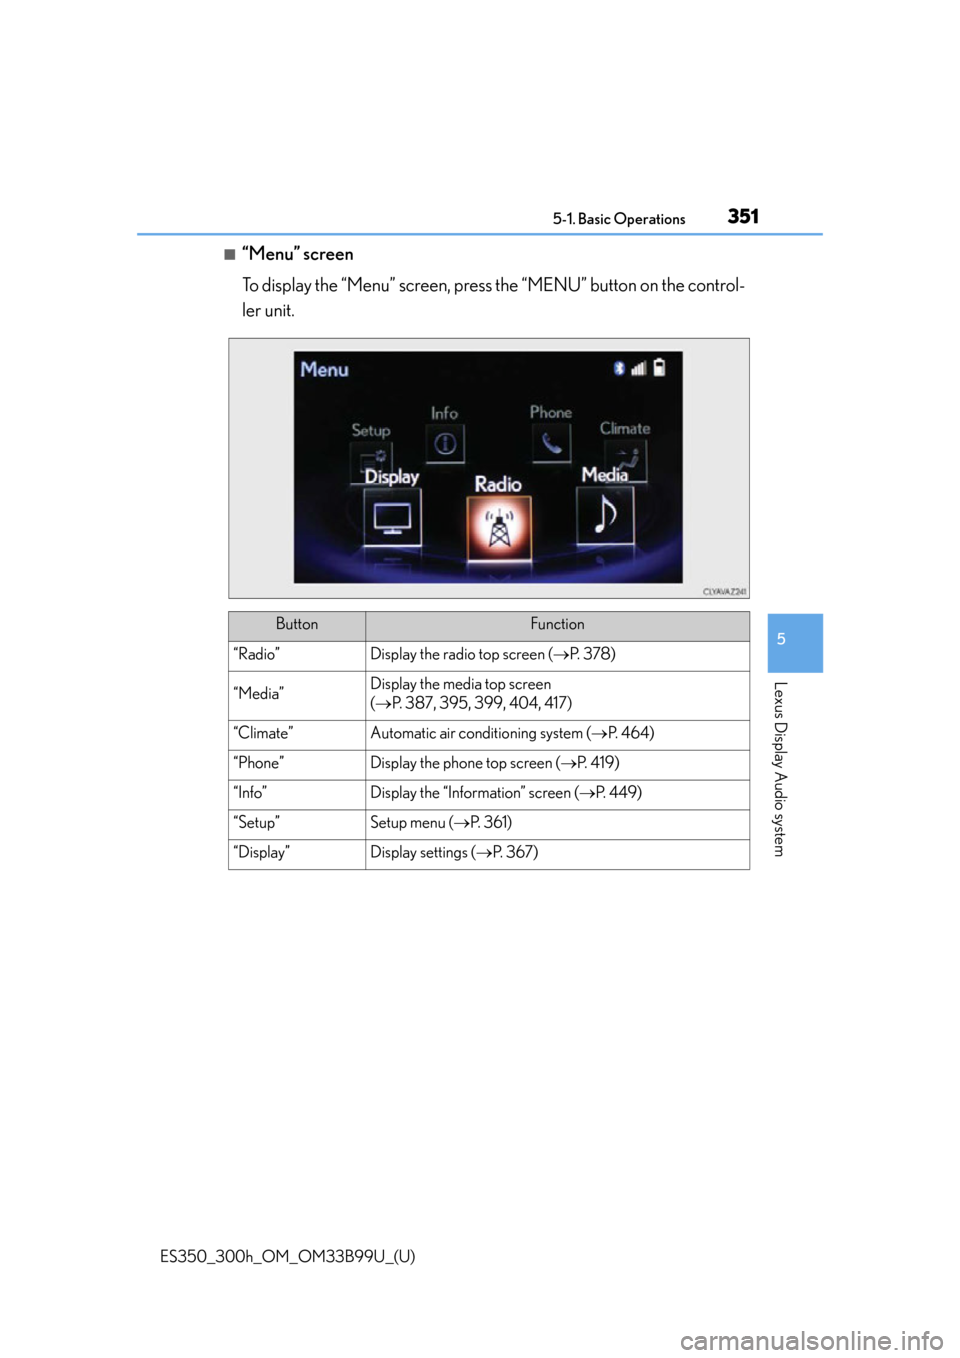 Lexus ES300h 2015  Specifications / Owners Manual (OM33B99U) ES350_300h_OM_OM33B99U_(U)
3515-1. Basic Operations
5
Lexus Display Audio system
■“Menu” screen
To display the “Menu” screen, press the “MENU” button on the control-
ler unit.
ButtonFunc